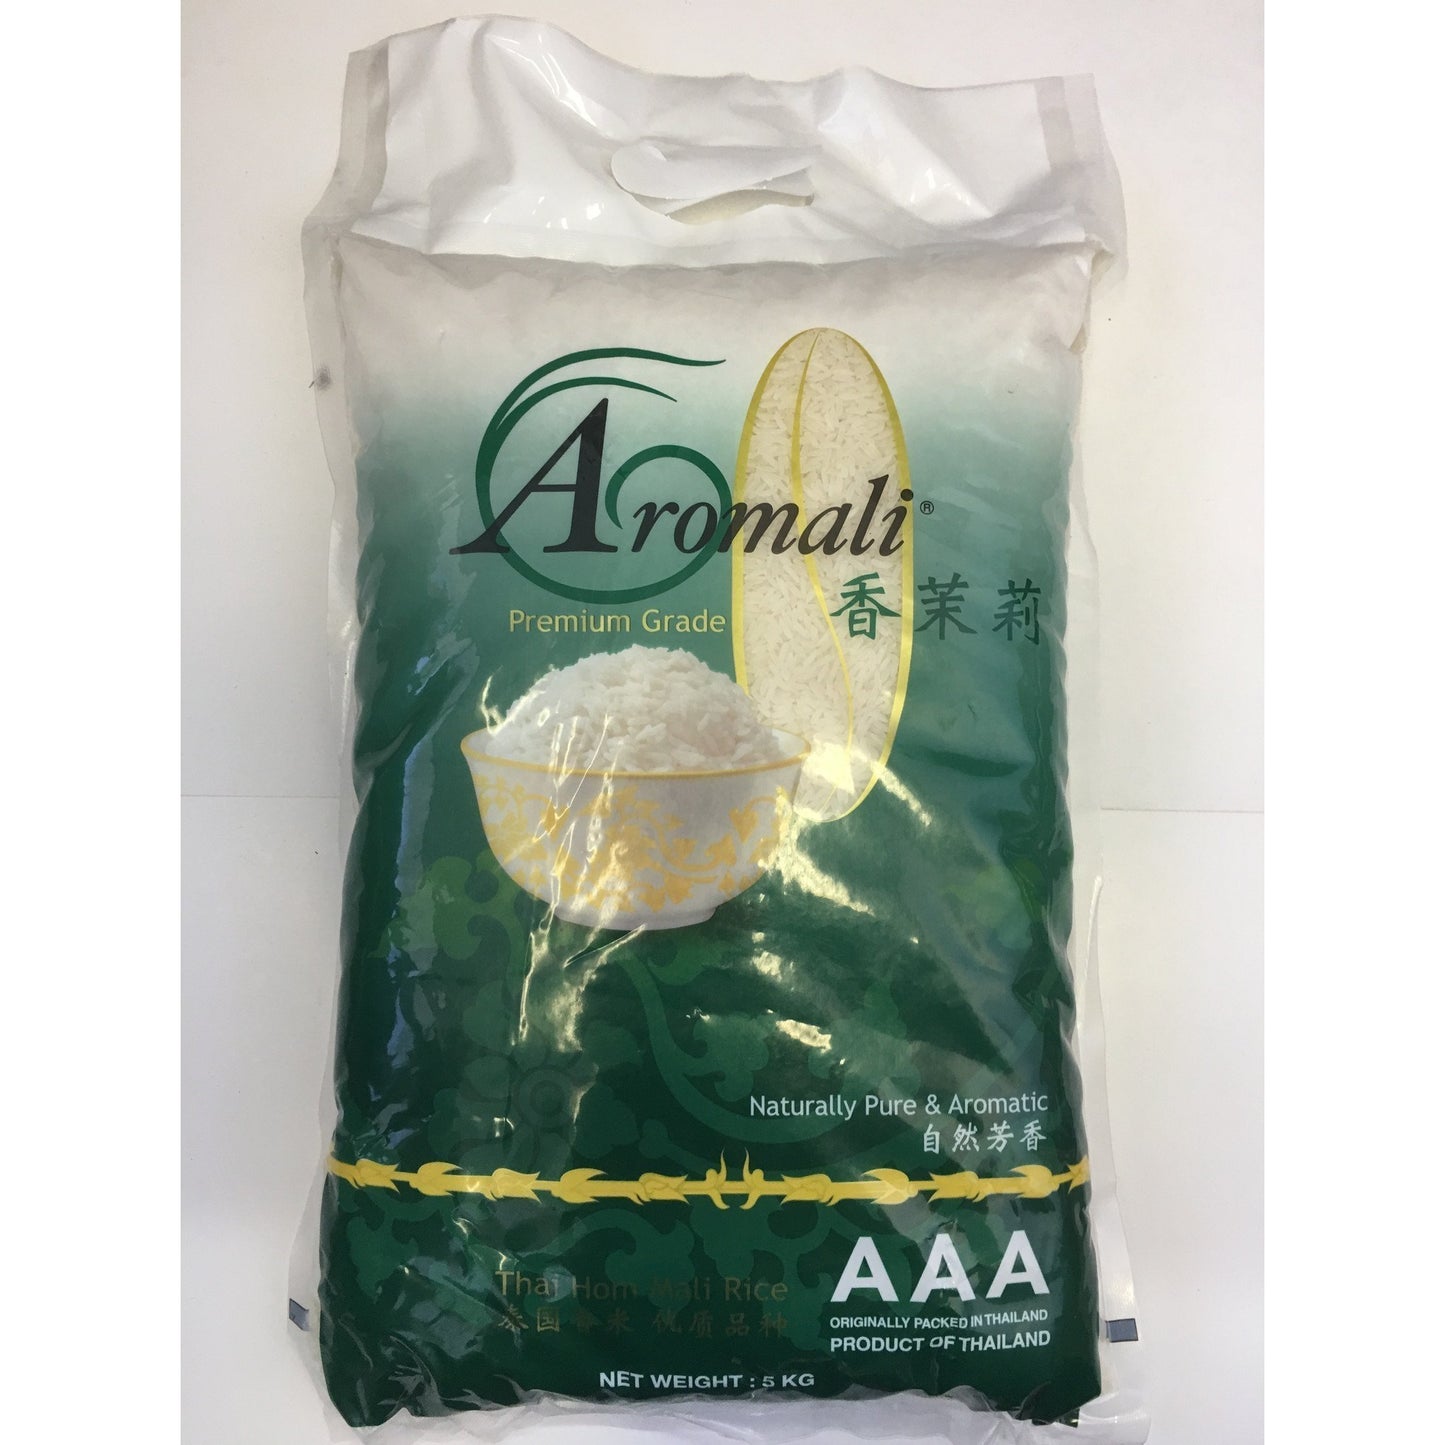 R001S Aromali Brand- Premium grade AAA Thai Jasmine Rice 5kg - 5 bags / 1 CTN - New Eastland Pty Ltd - Asian food wholesalers